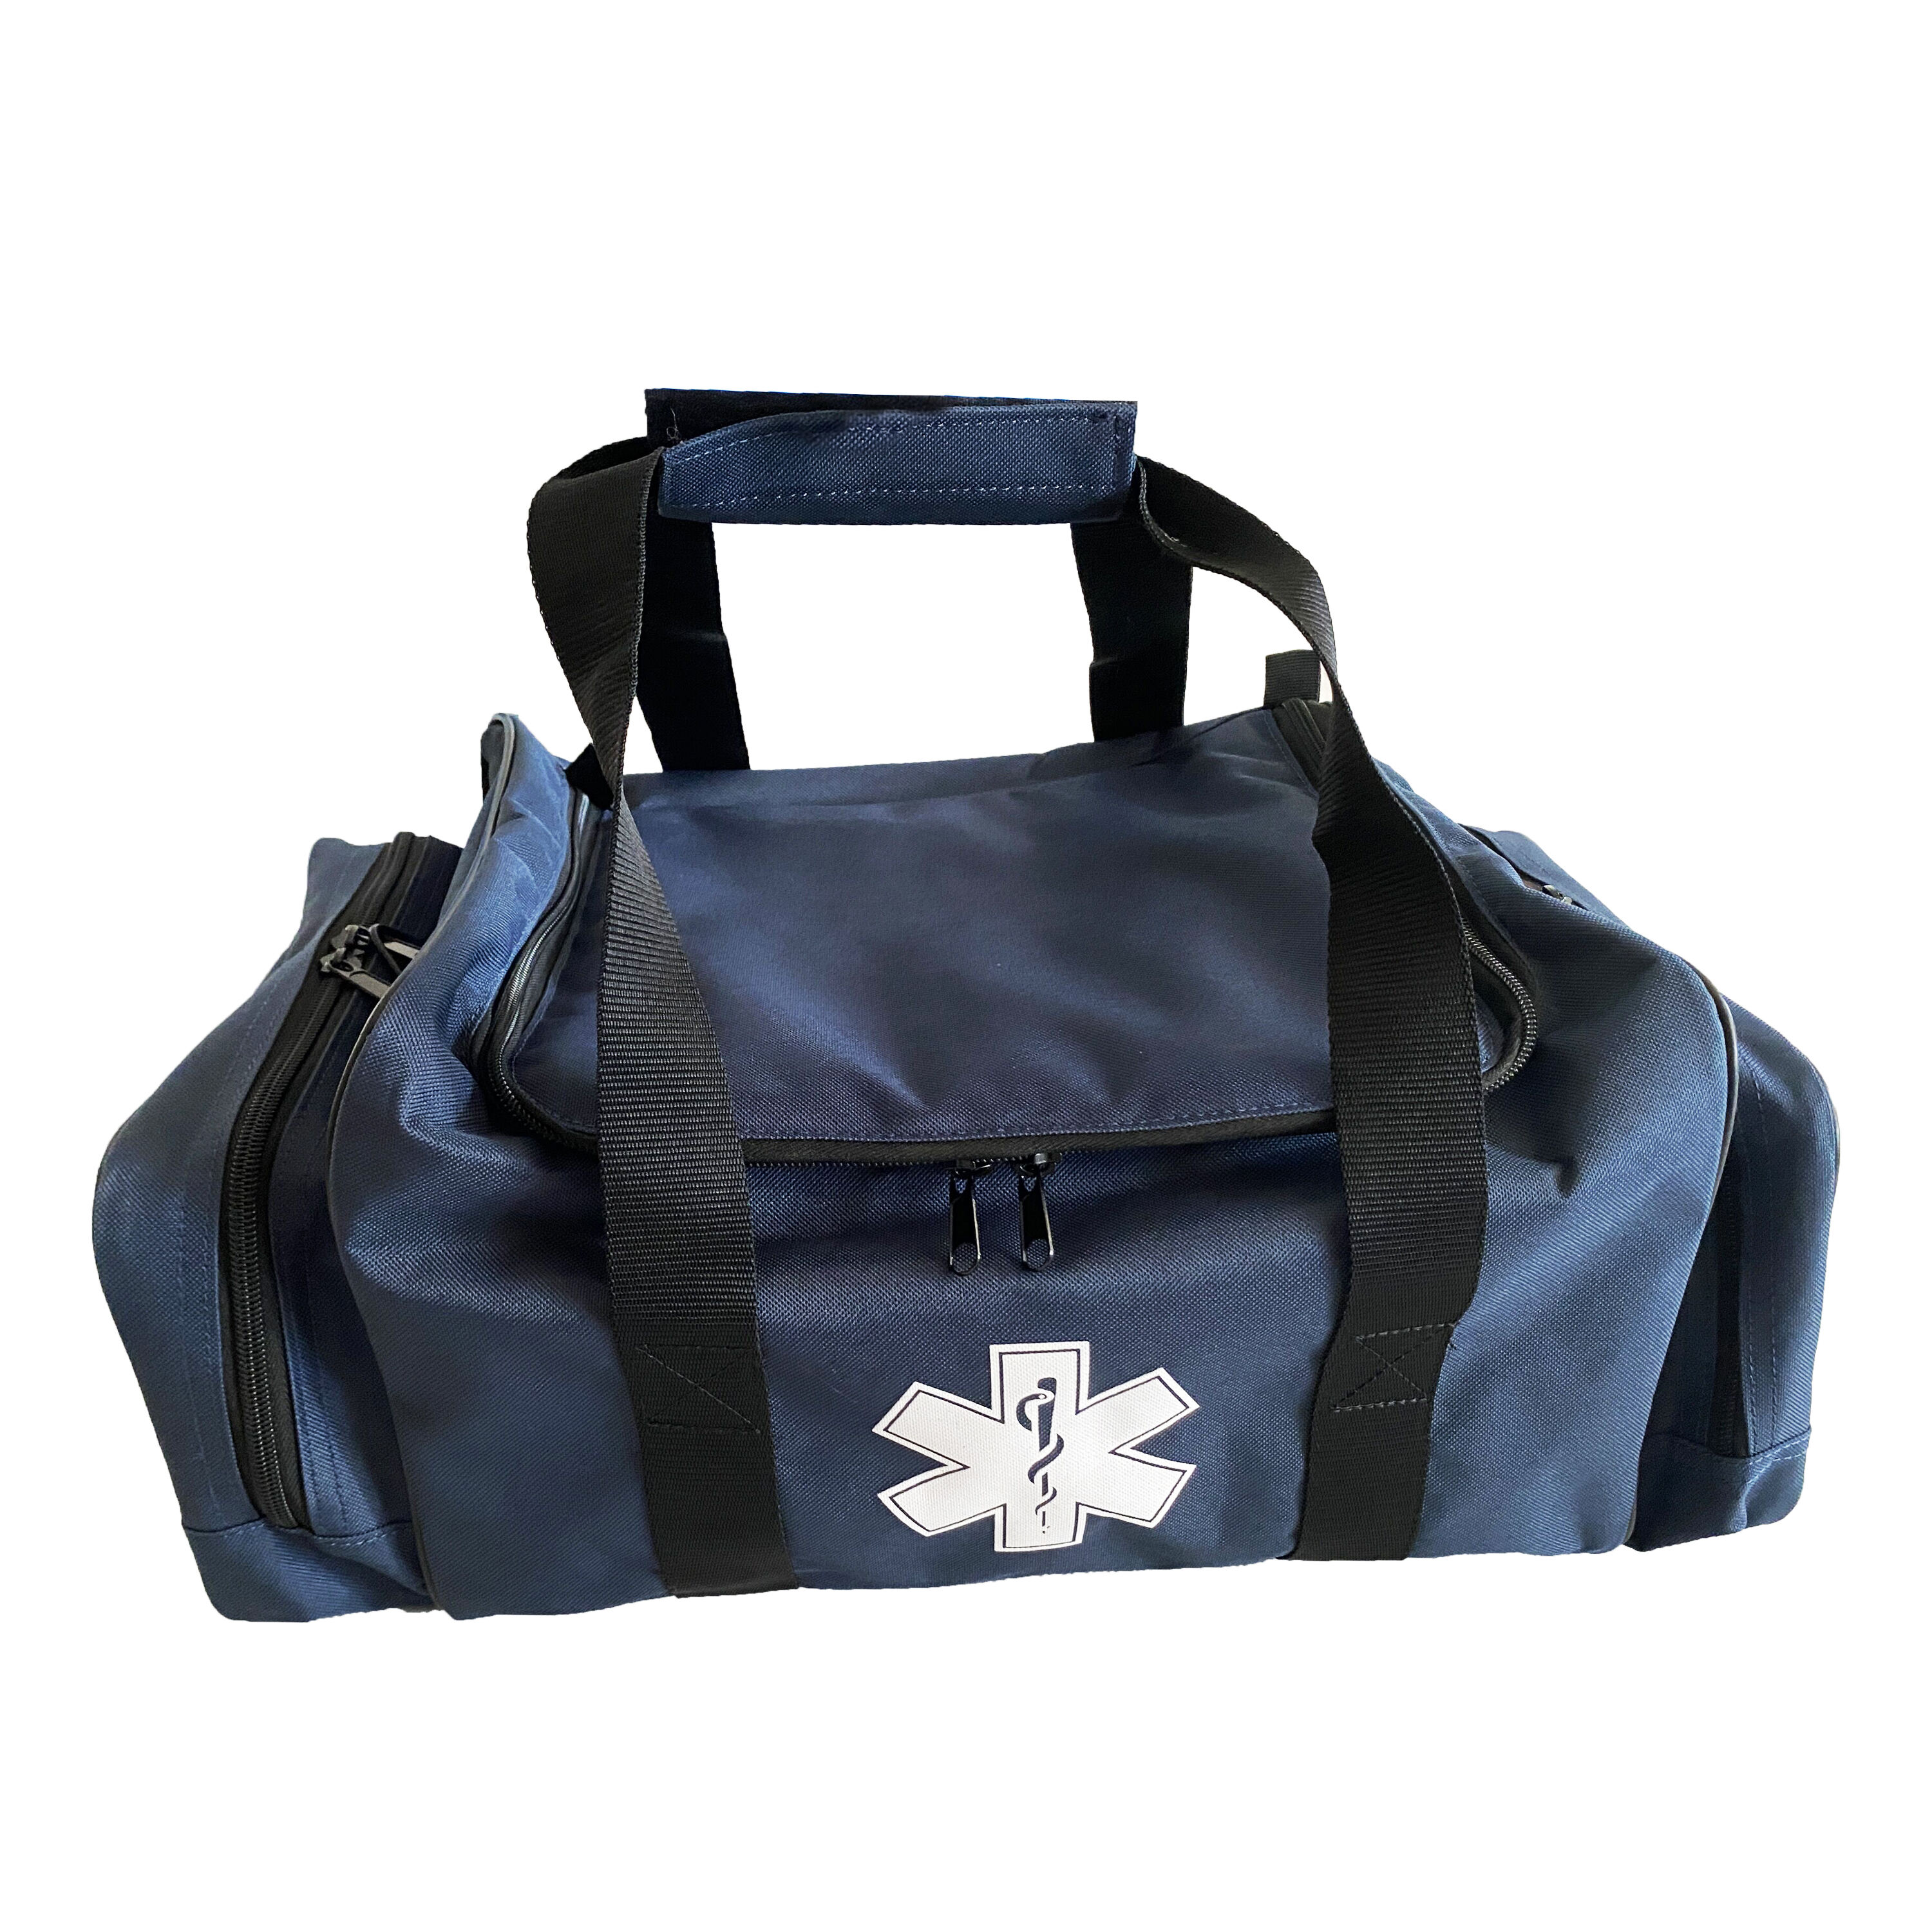 XH-22 Tactical Durability Attack Medical Bag First Aid Kits 